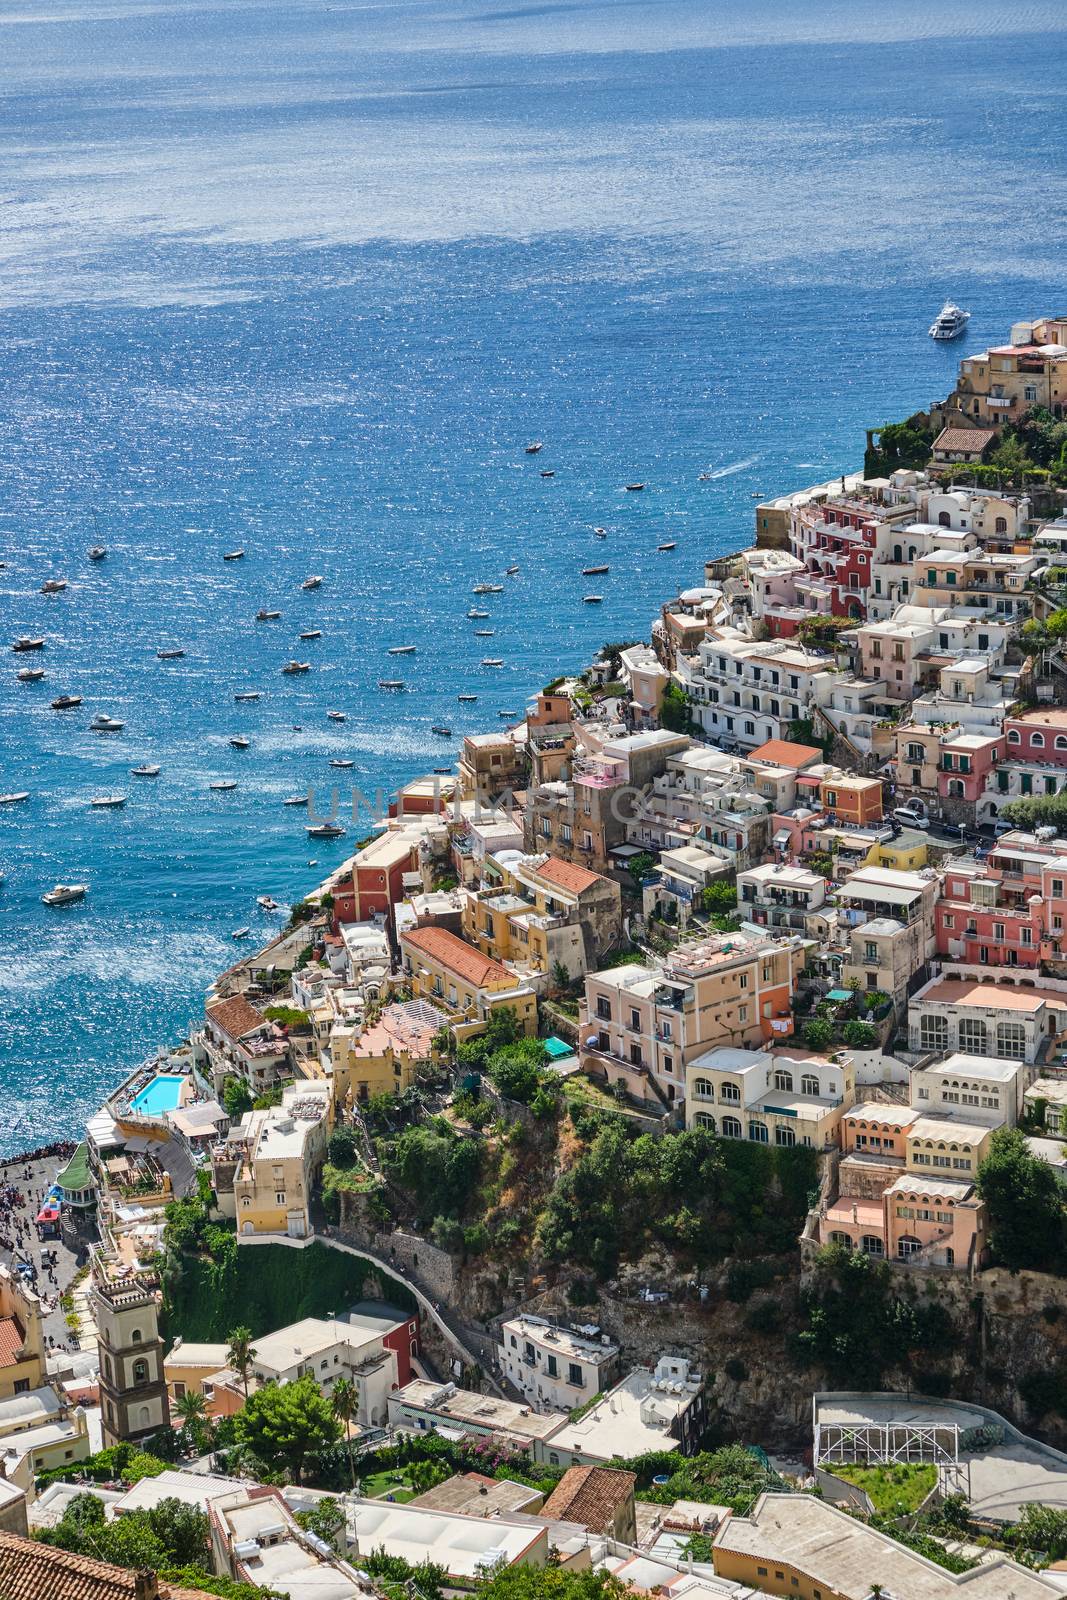 View of the beautiful town of Positano on the italian Amalfi coast